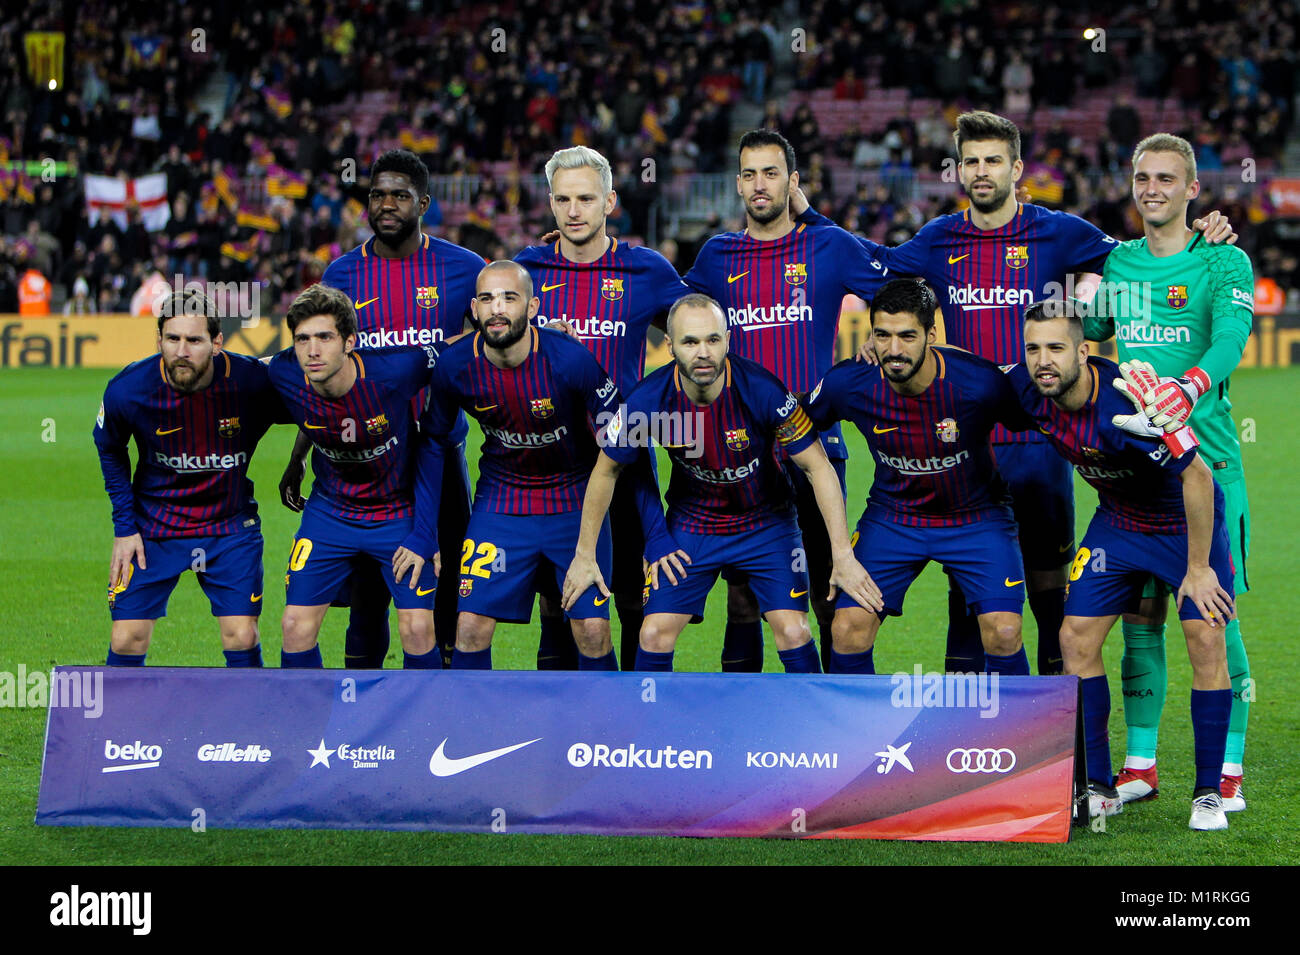 Fc Barcelona Team Stock Photos & Fc Barcelona Team Stock Images - Alamy1300 x 955